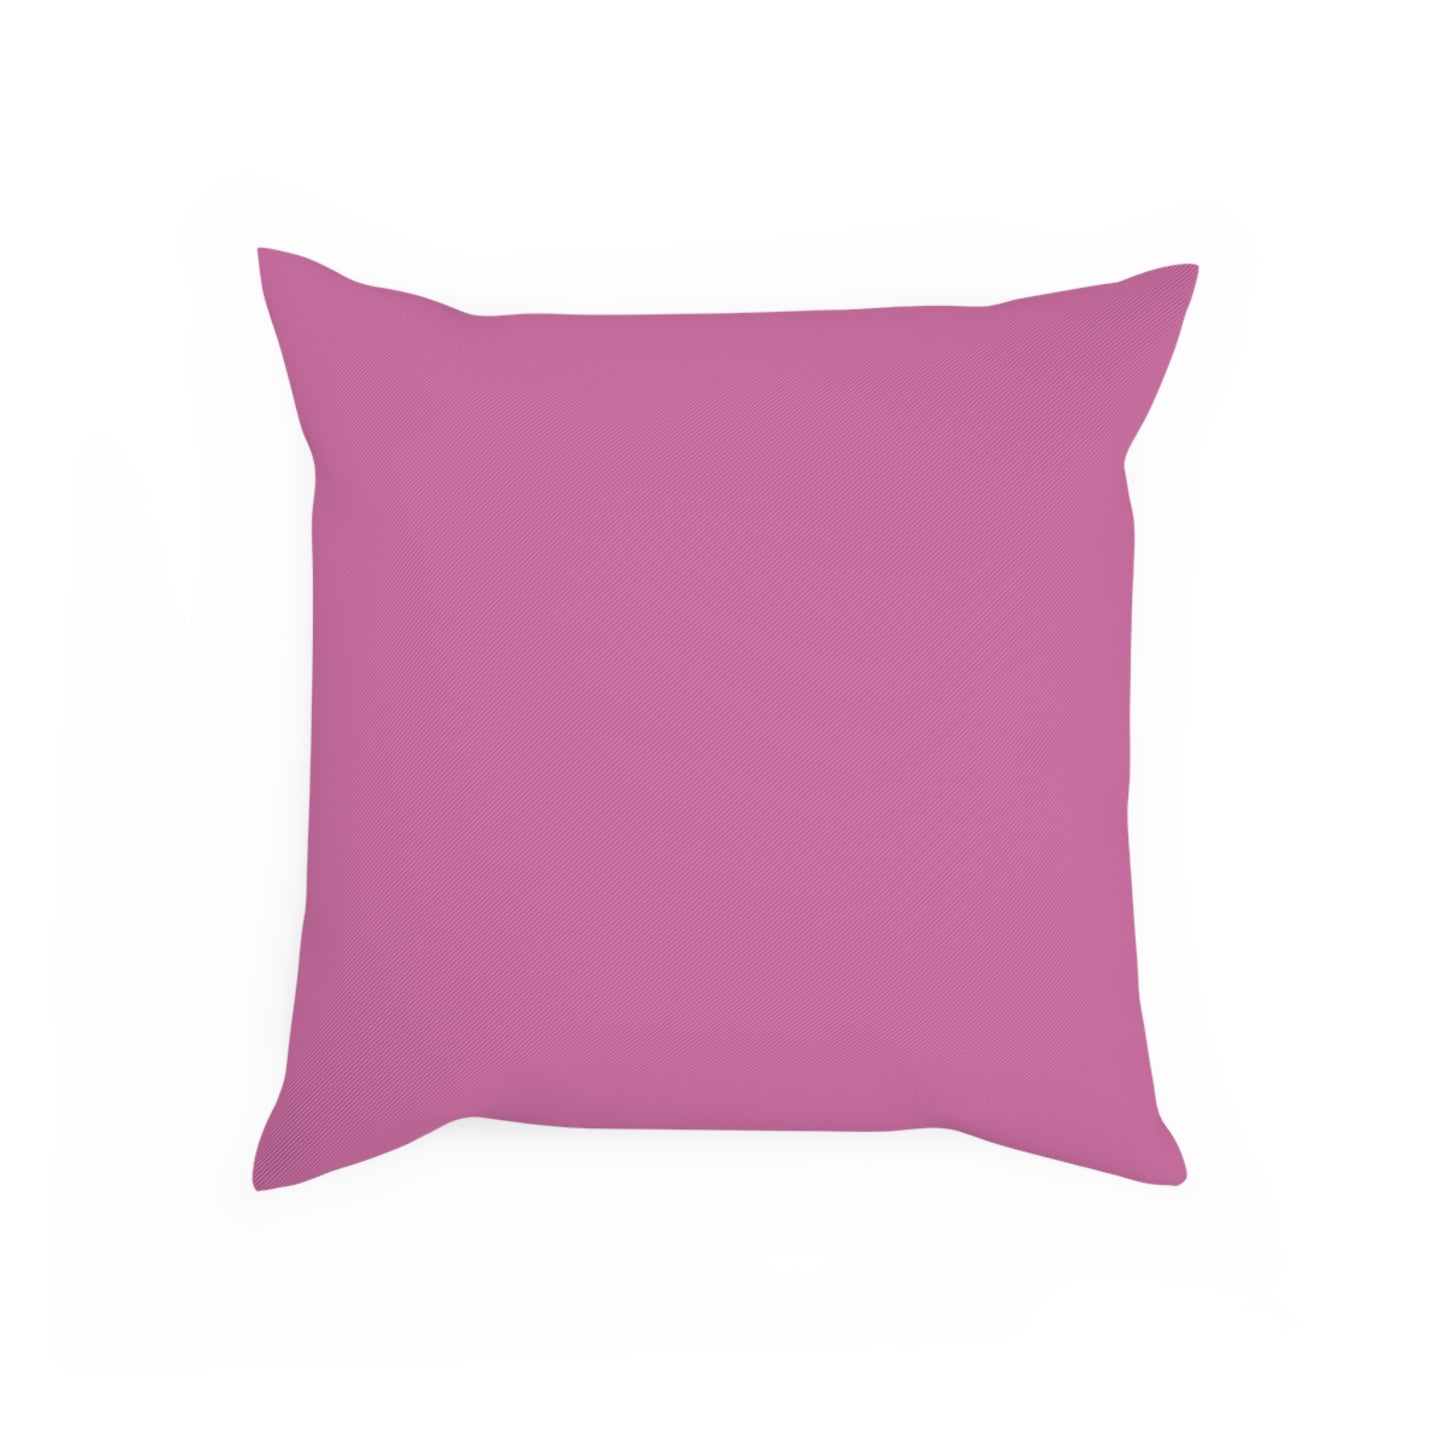 Ciocolatte Cushion pink